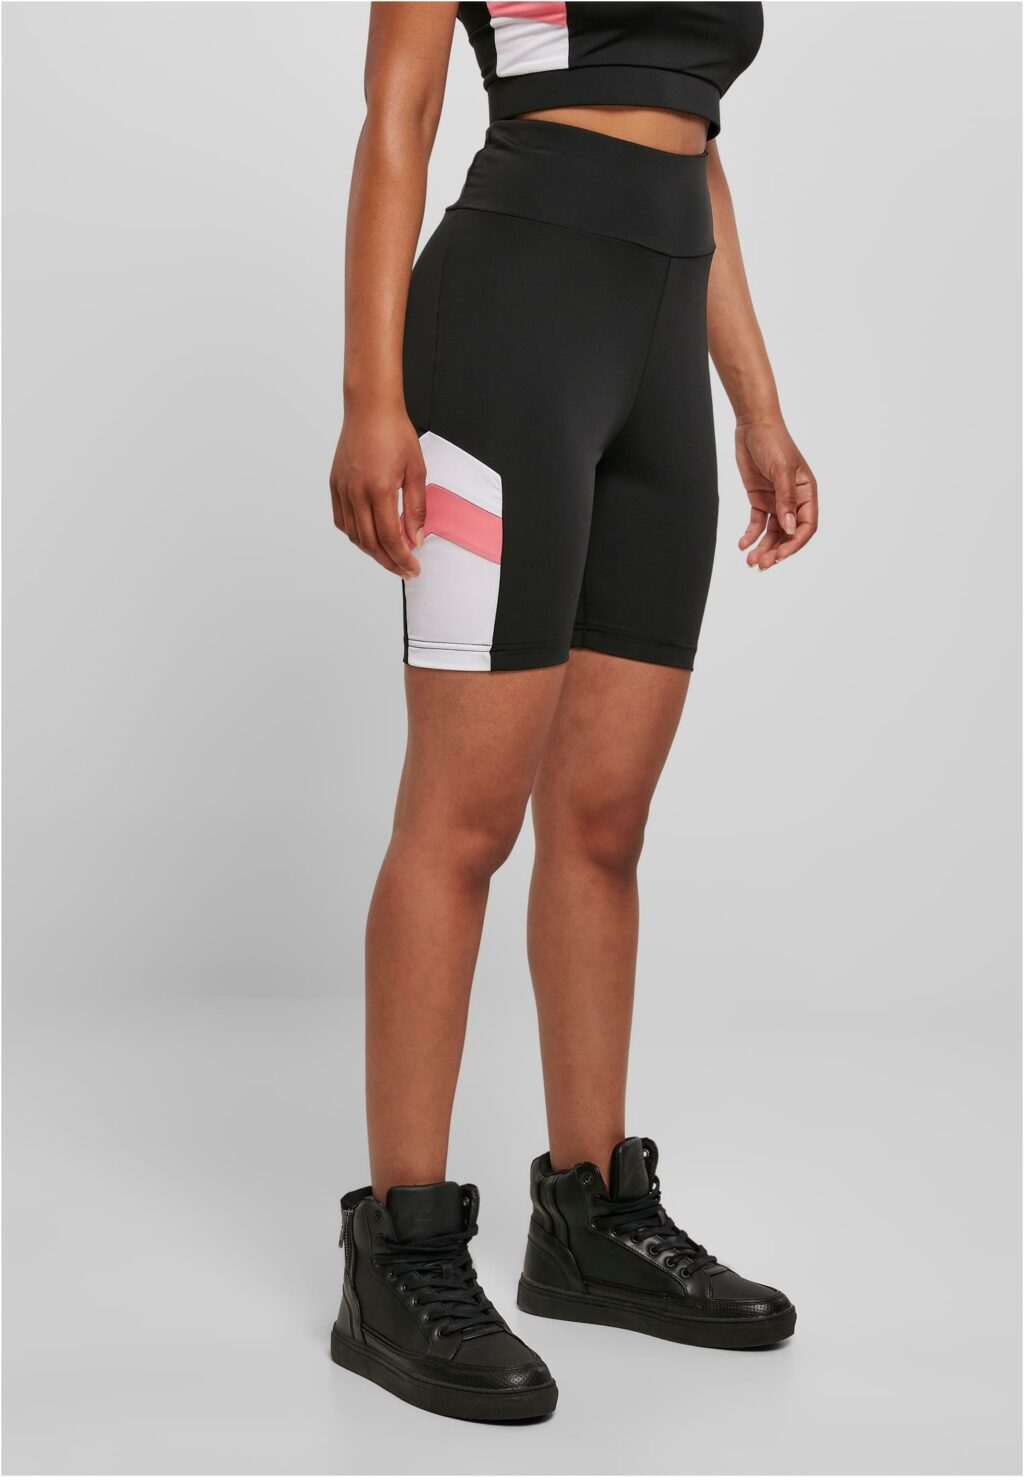 Ladies Starter Cycle Shorts black/white ST236